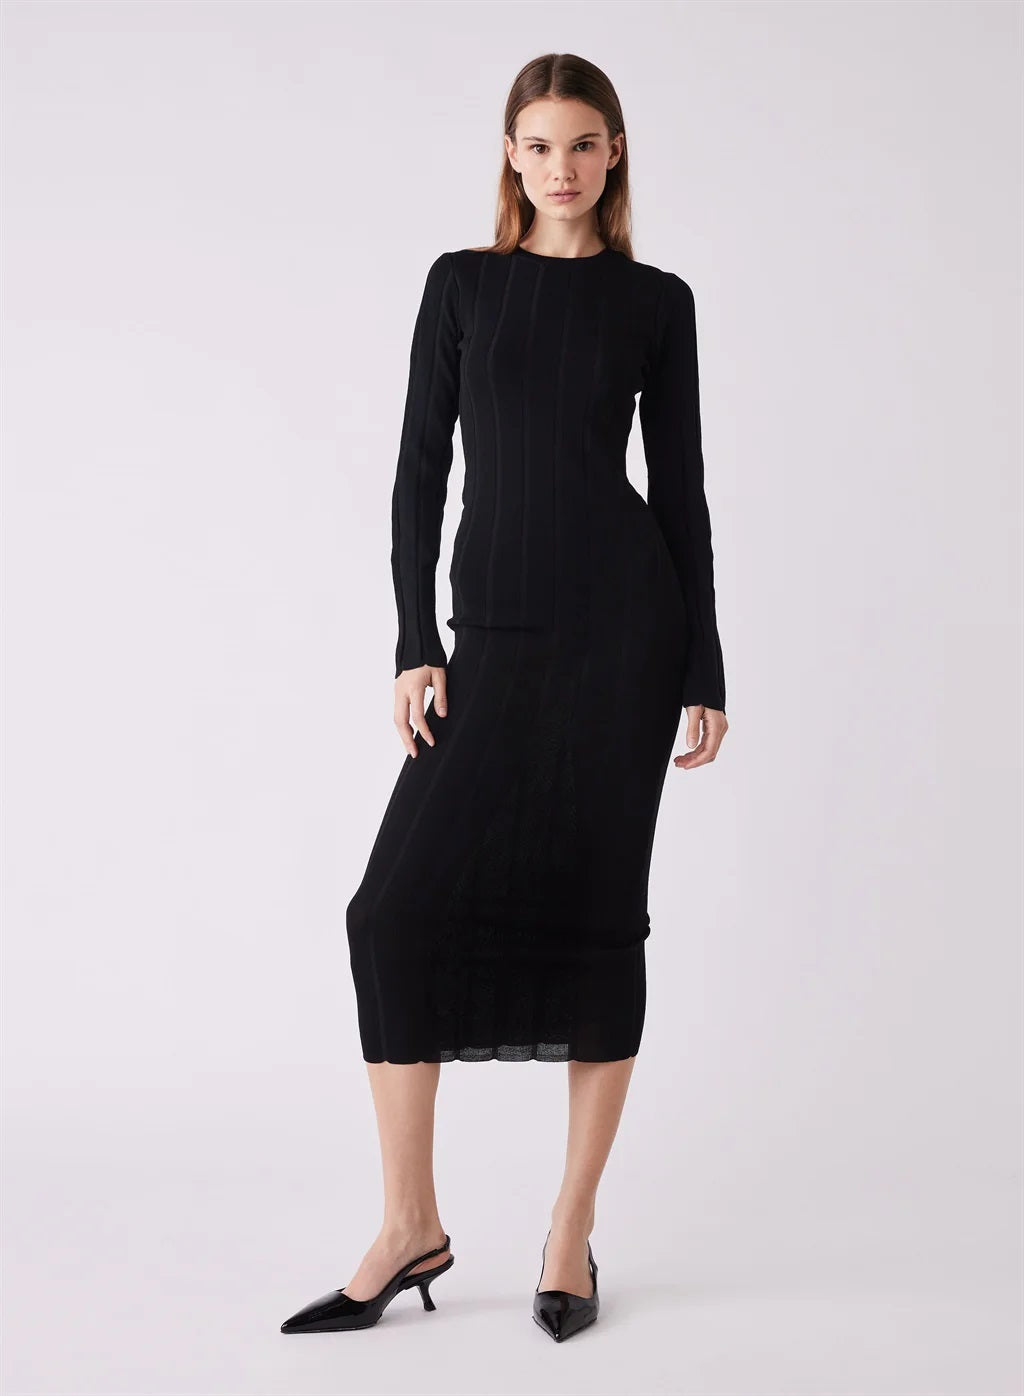 Esmaee Avenue Dress [COLOUR:Black SIZE:XS]